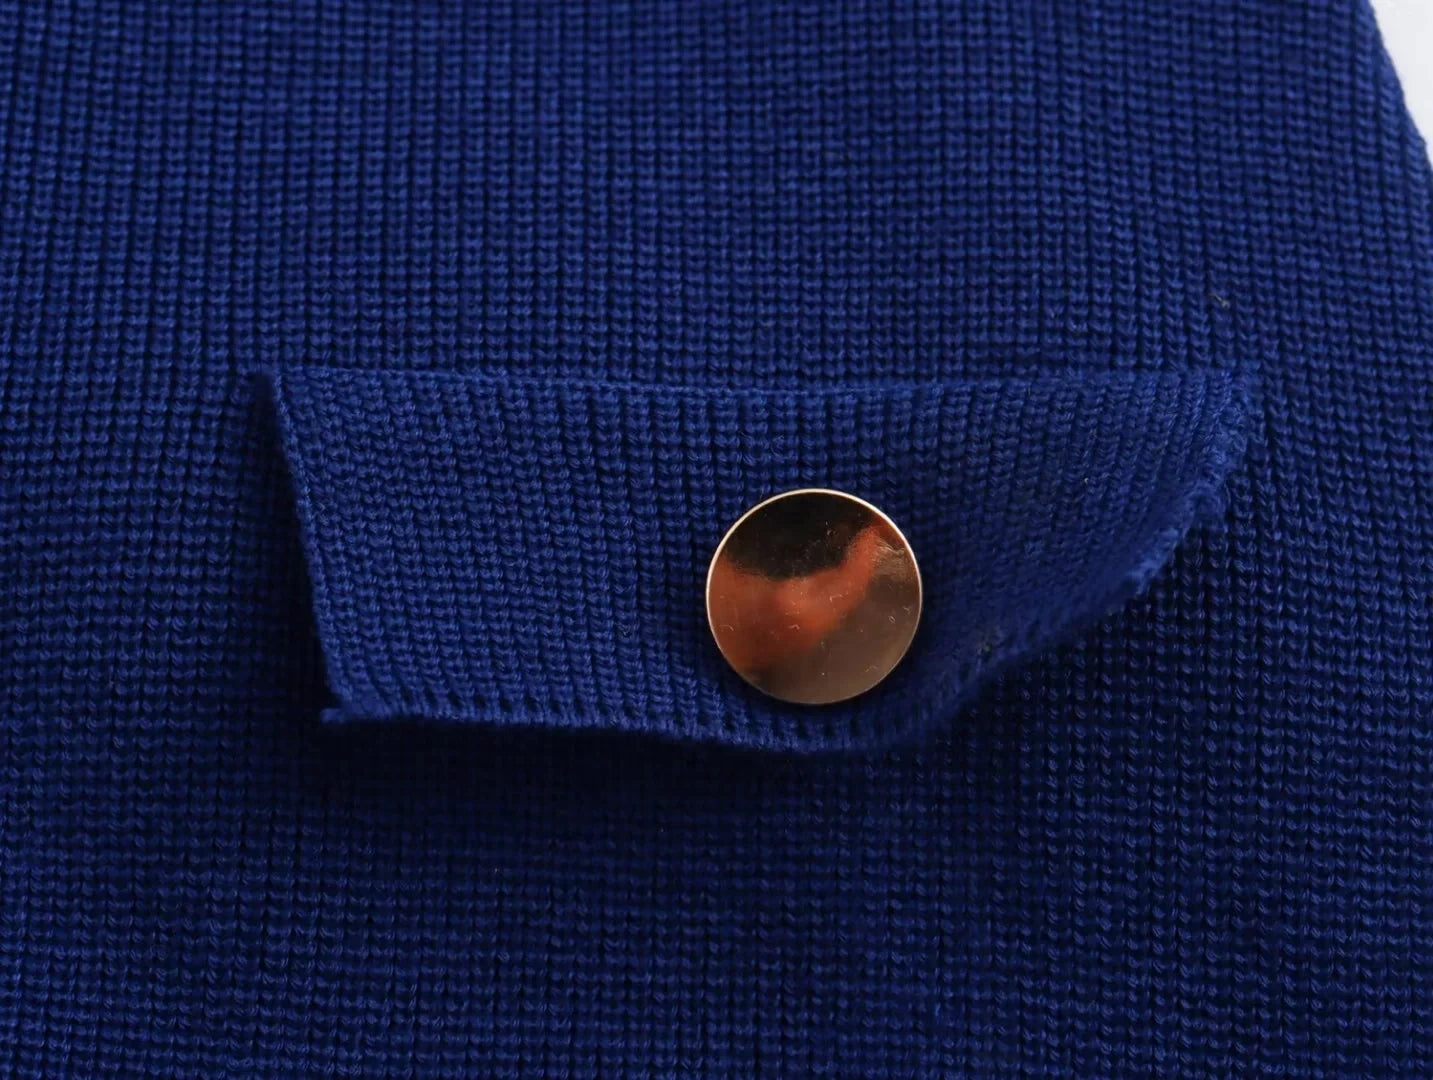 Midi Dresses- Elegant Day-to-Night Sleeveless Button-Front Dress in Knit- - Chuzko Women Clothing